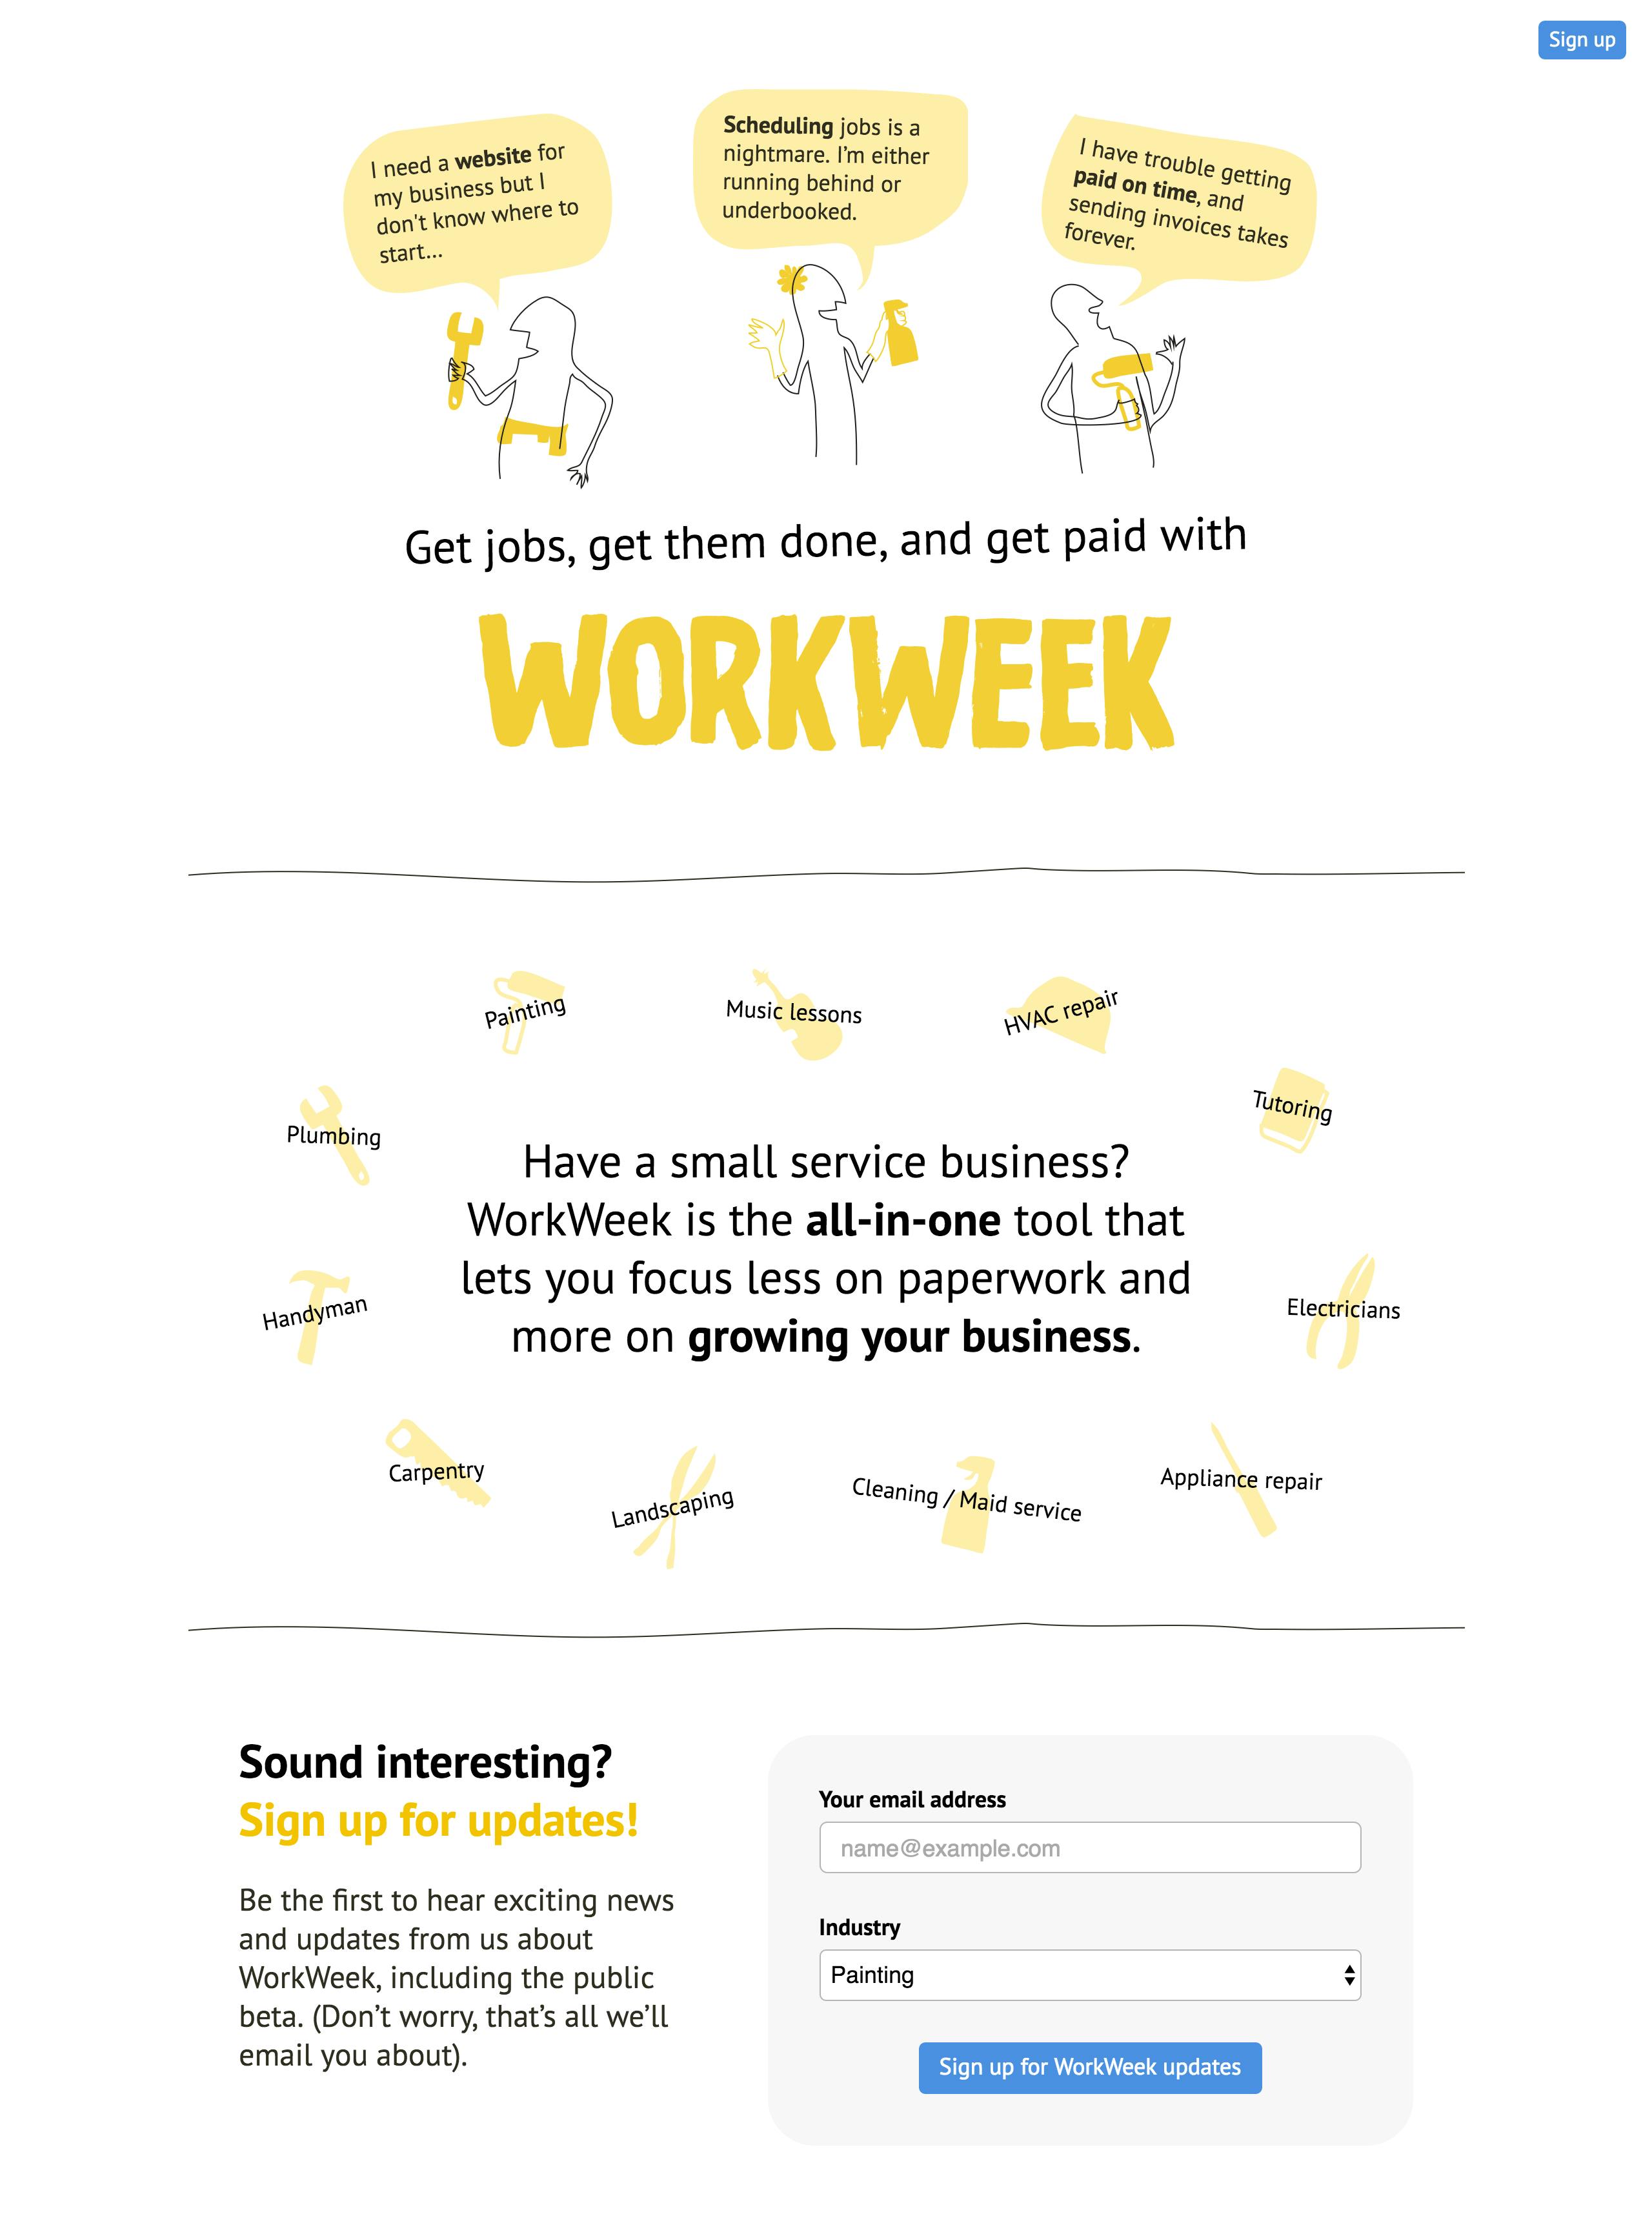 WorkWeek Website Screenshot